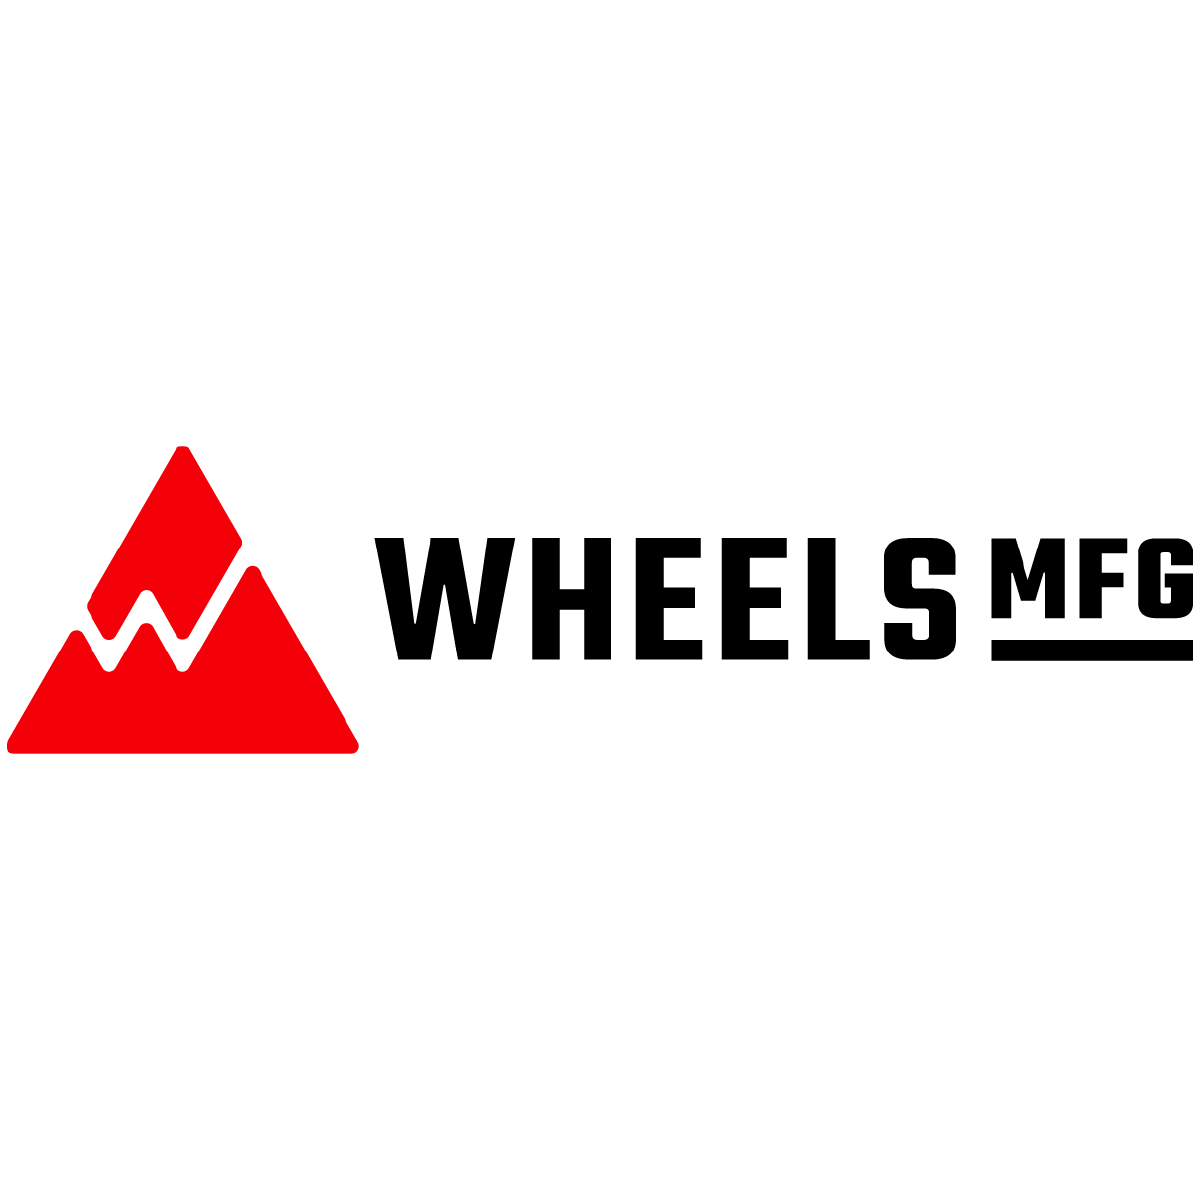 Wheels mfg